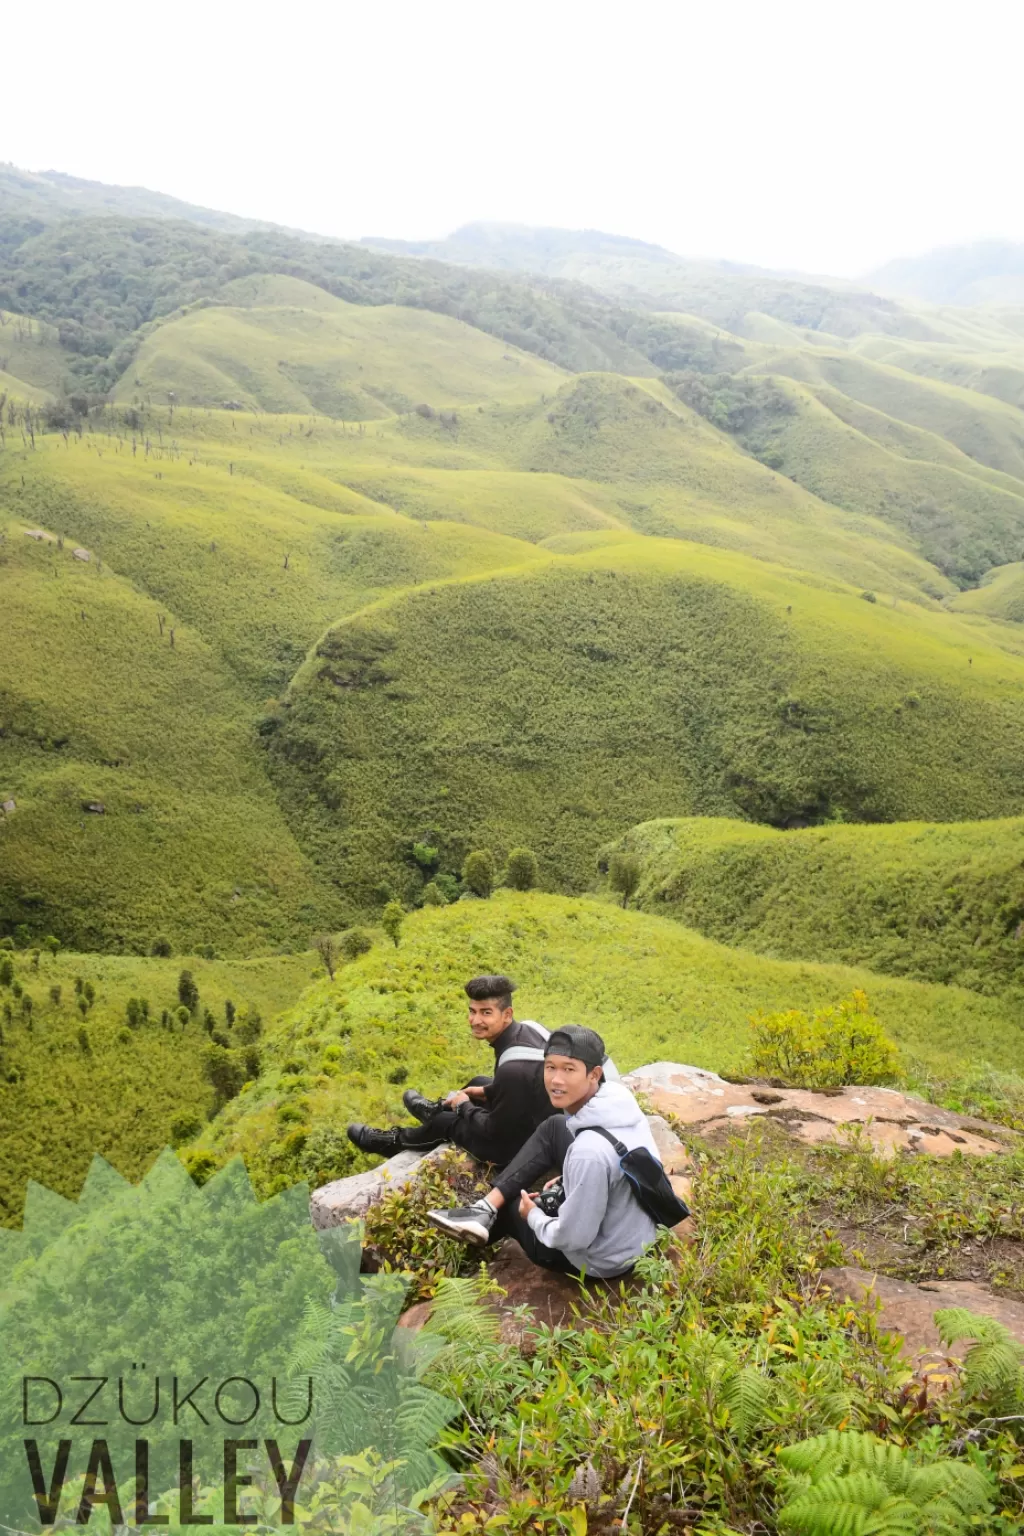 Photo of Dzüko Valley By tribeni ranjan gogoi